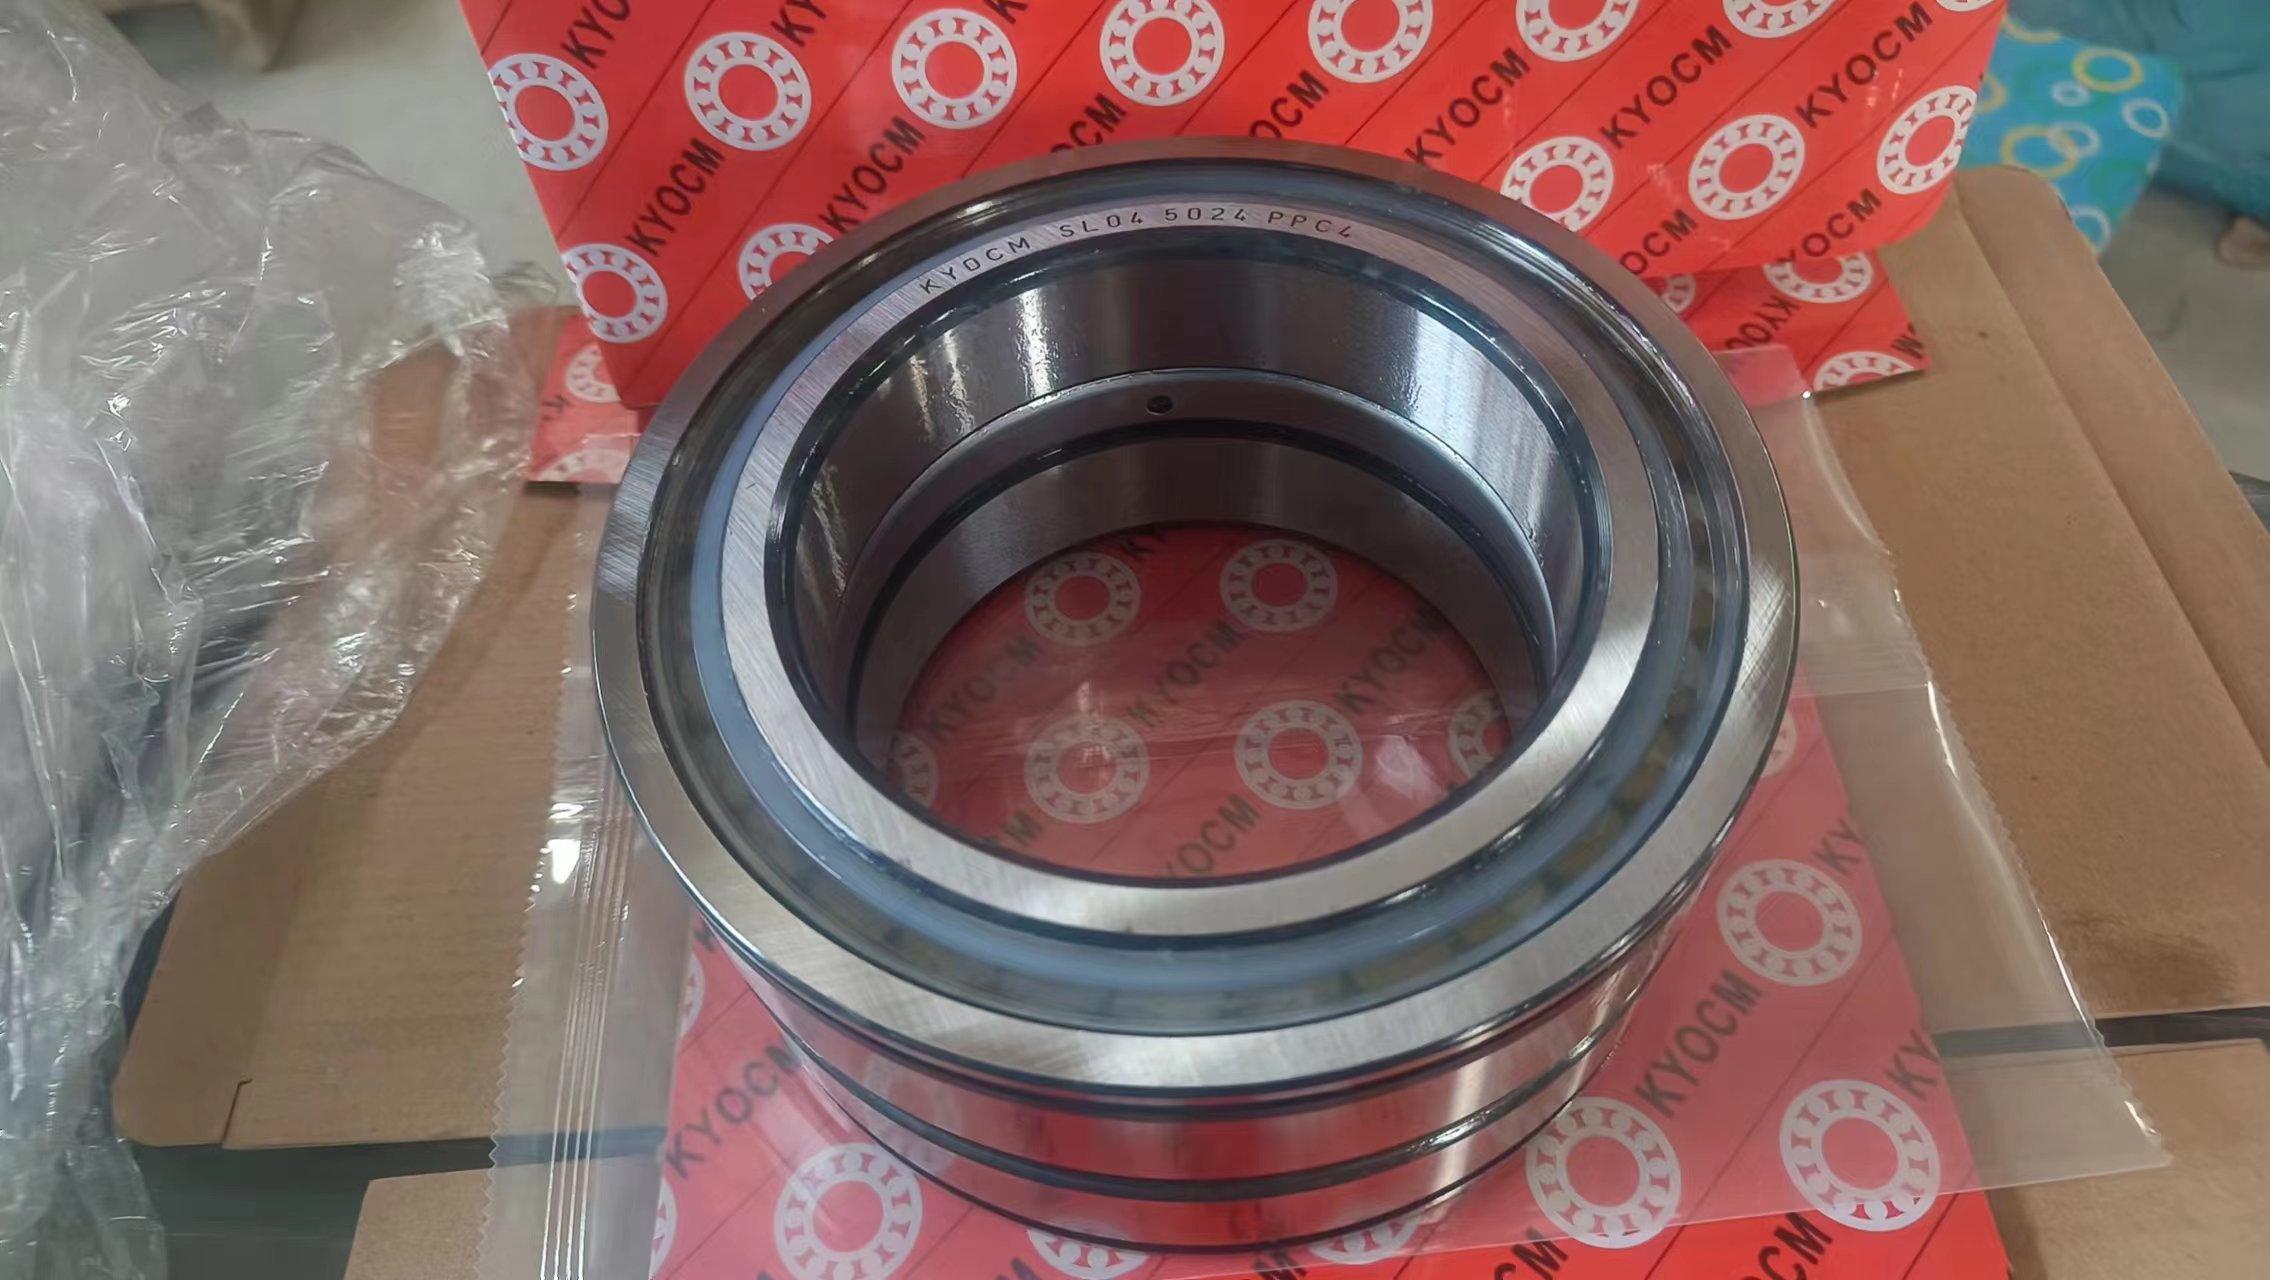 Full Complement Cylindrical Roller Bearing SL045024PP SL04 5024 PP Bearing 120*180*80mm 